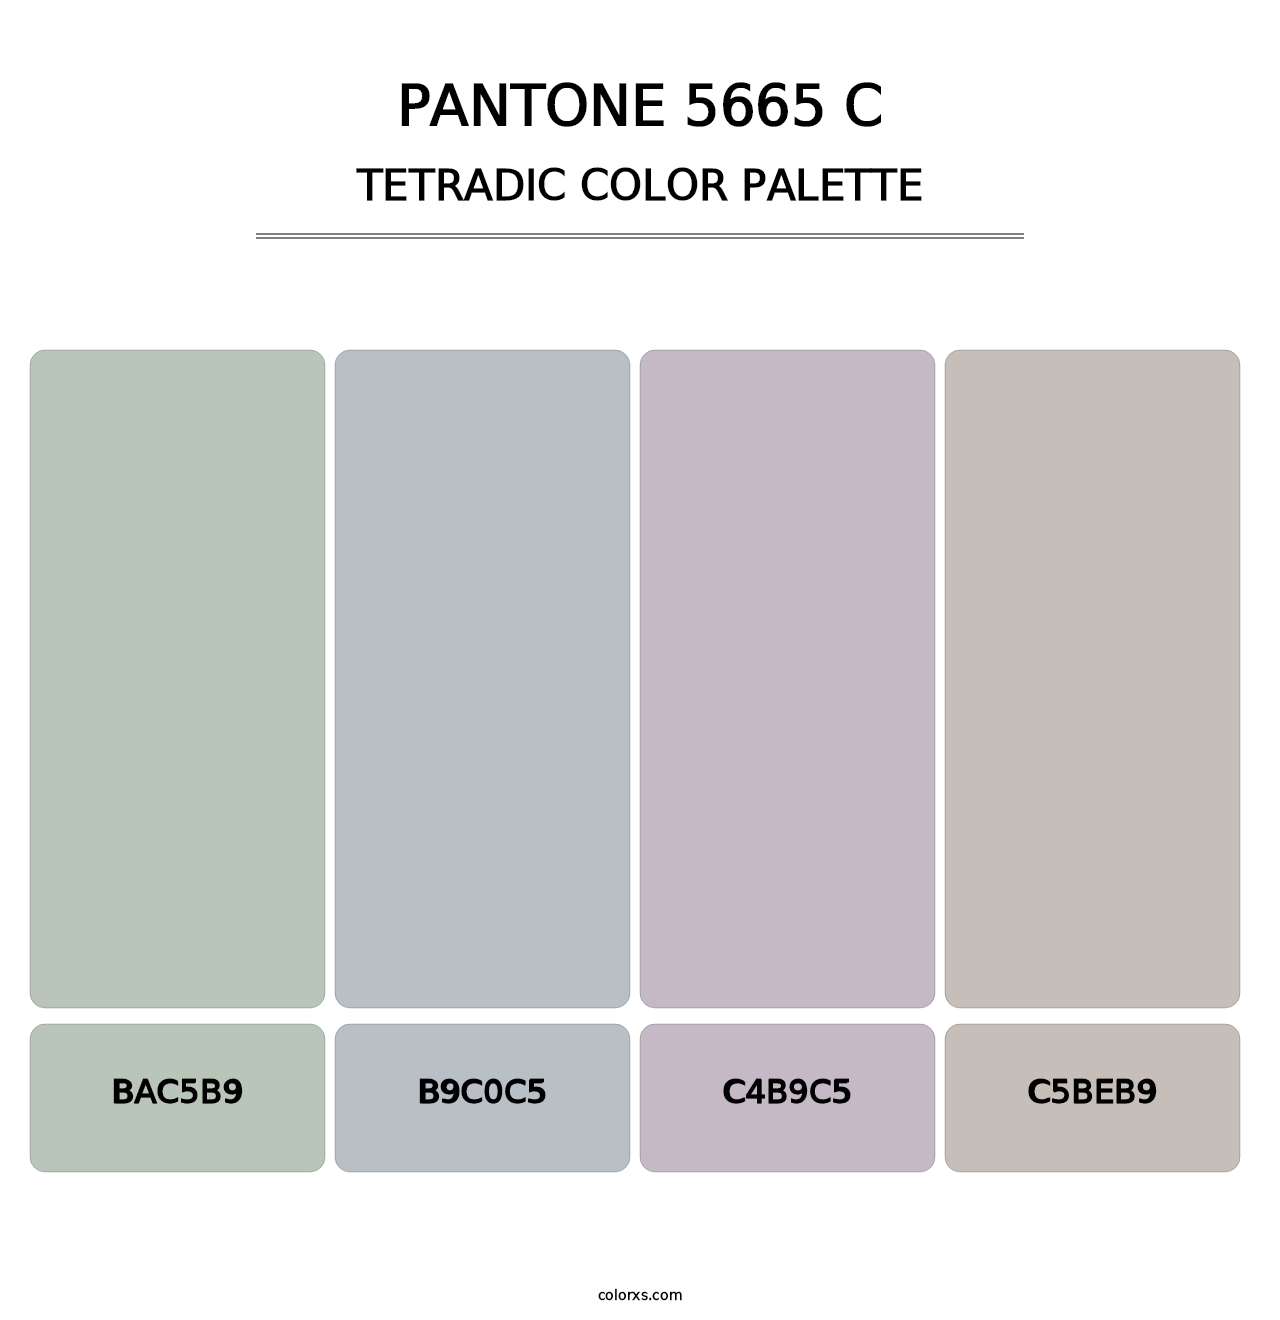 PANTONE 5665 C - Tetradic Color Palette